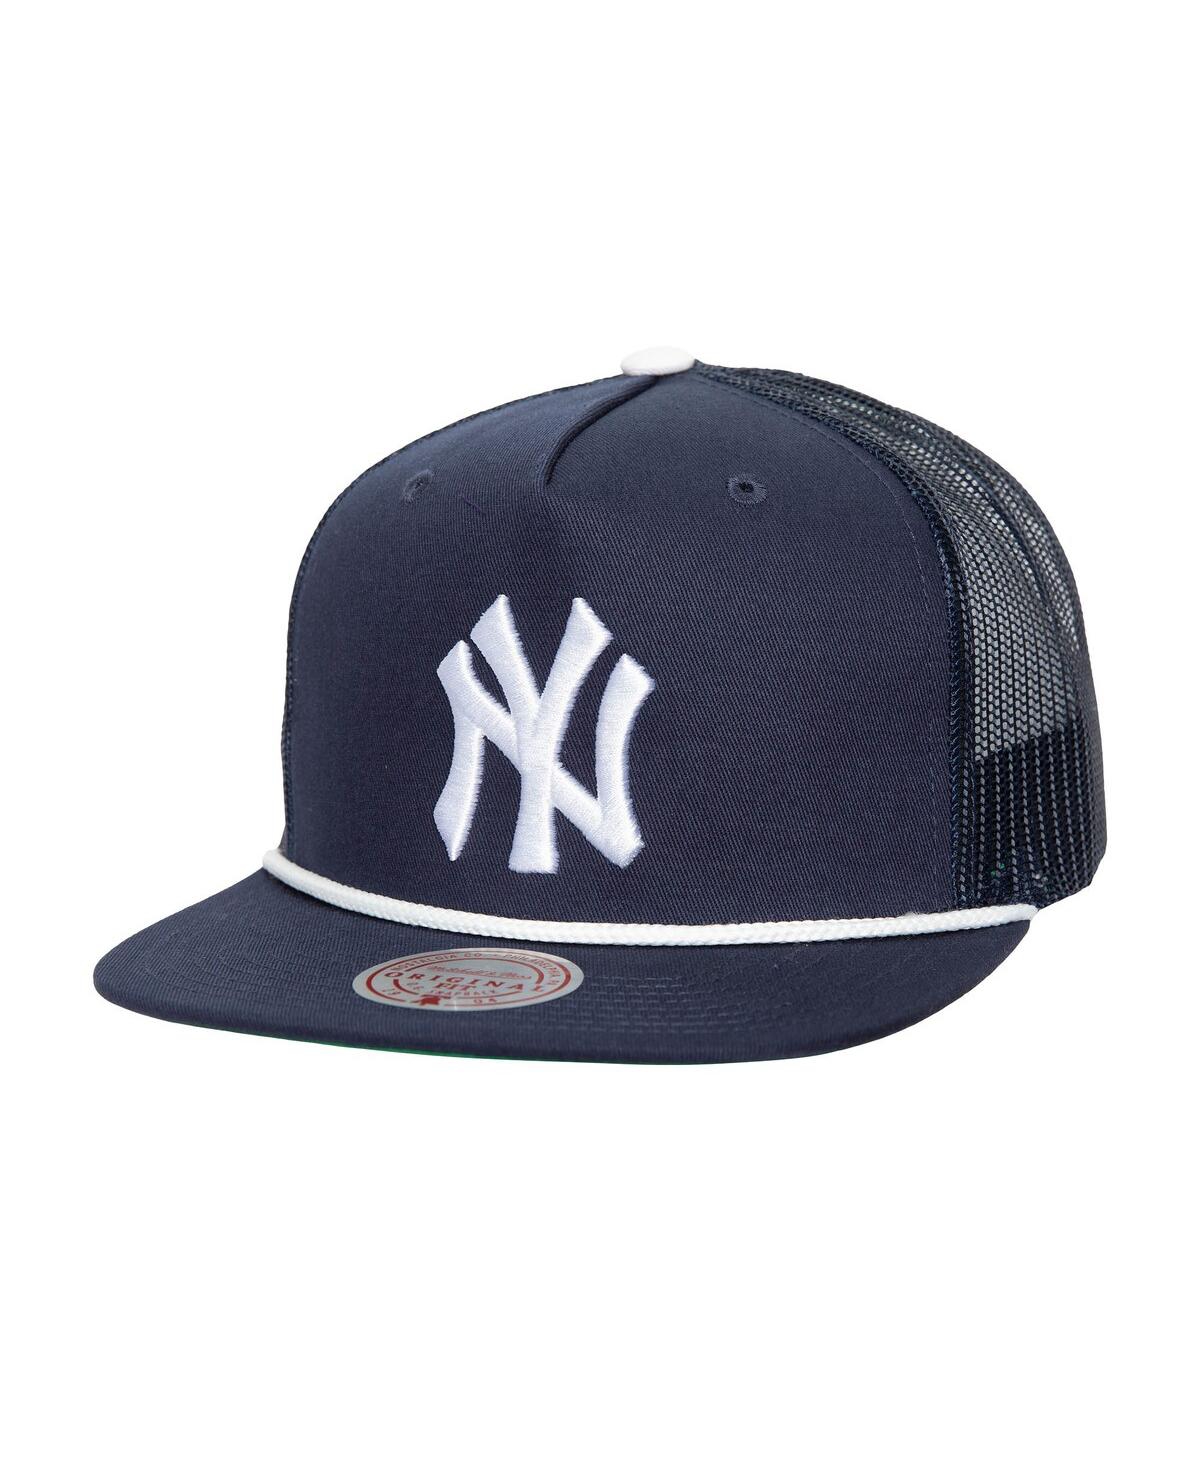 Mitchell Ness Men's Navy New York Yankees Rope Trucker Snapback Hat - Navy